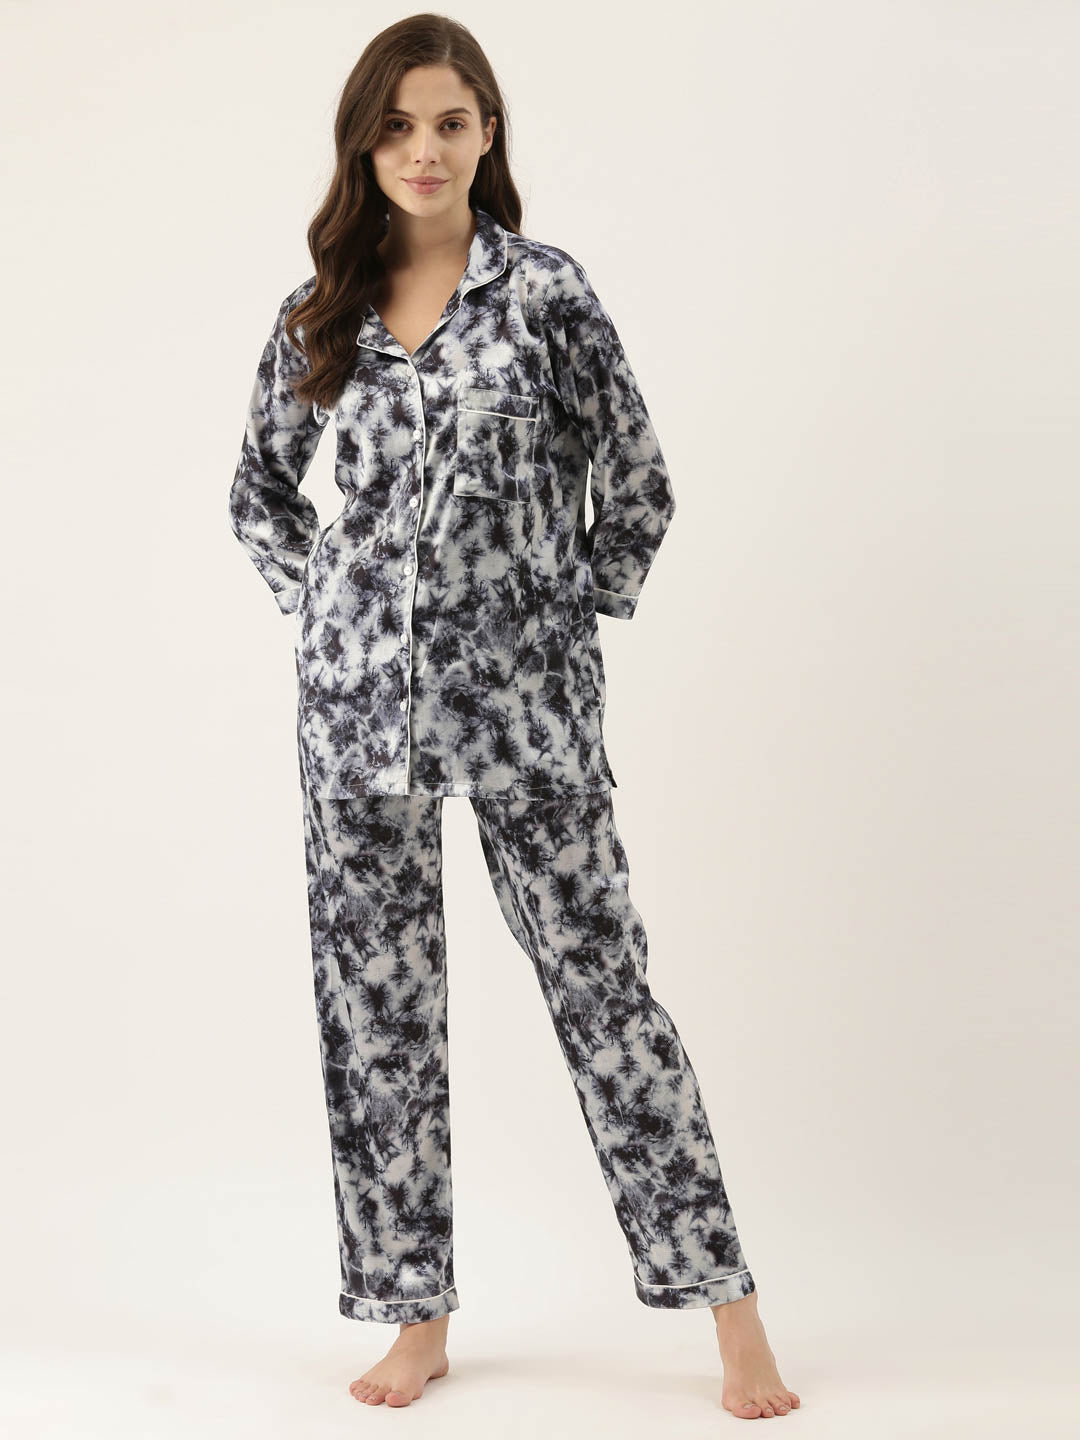 Trending Tiger/Leopard Print Night Suit Shirt & Pyjama set for women